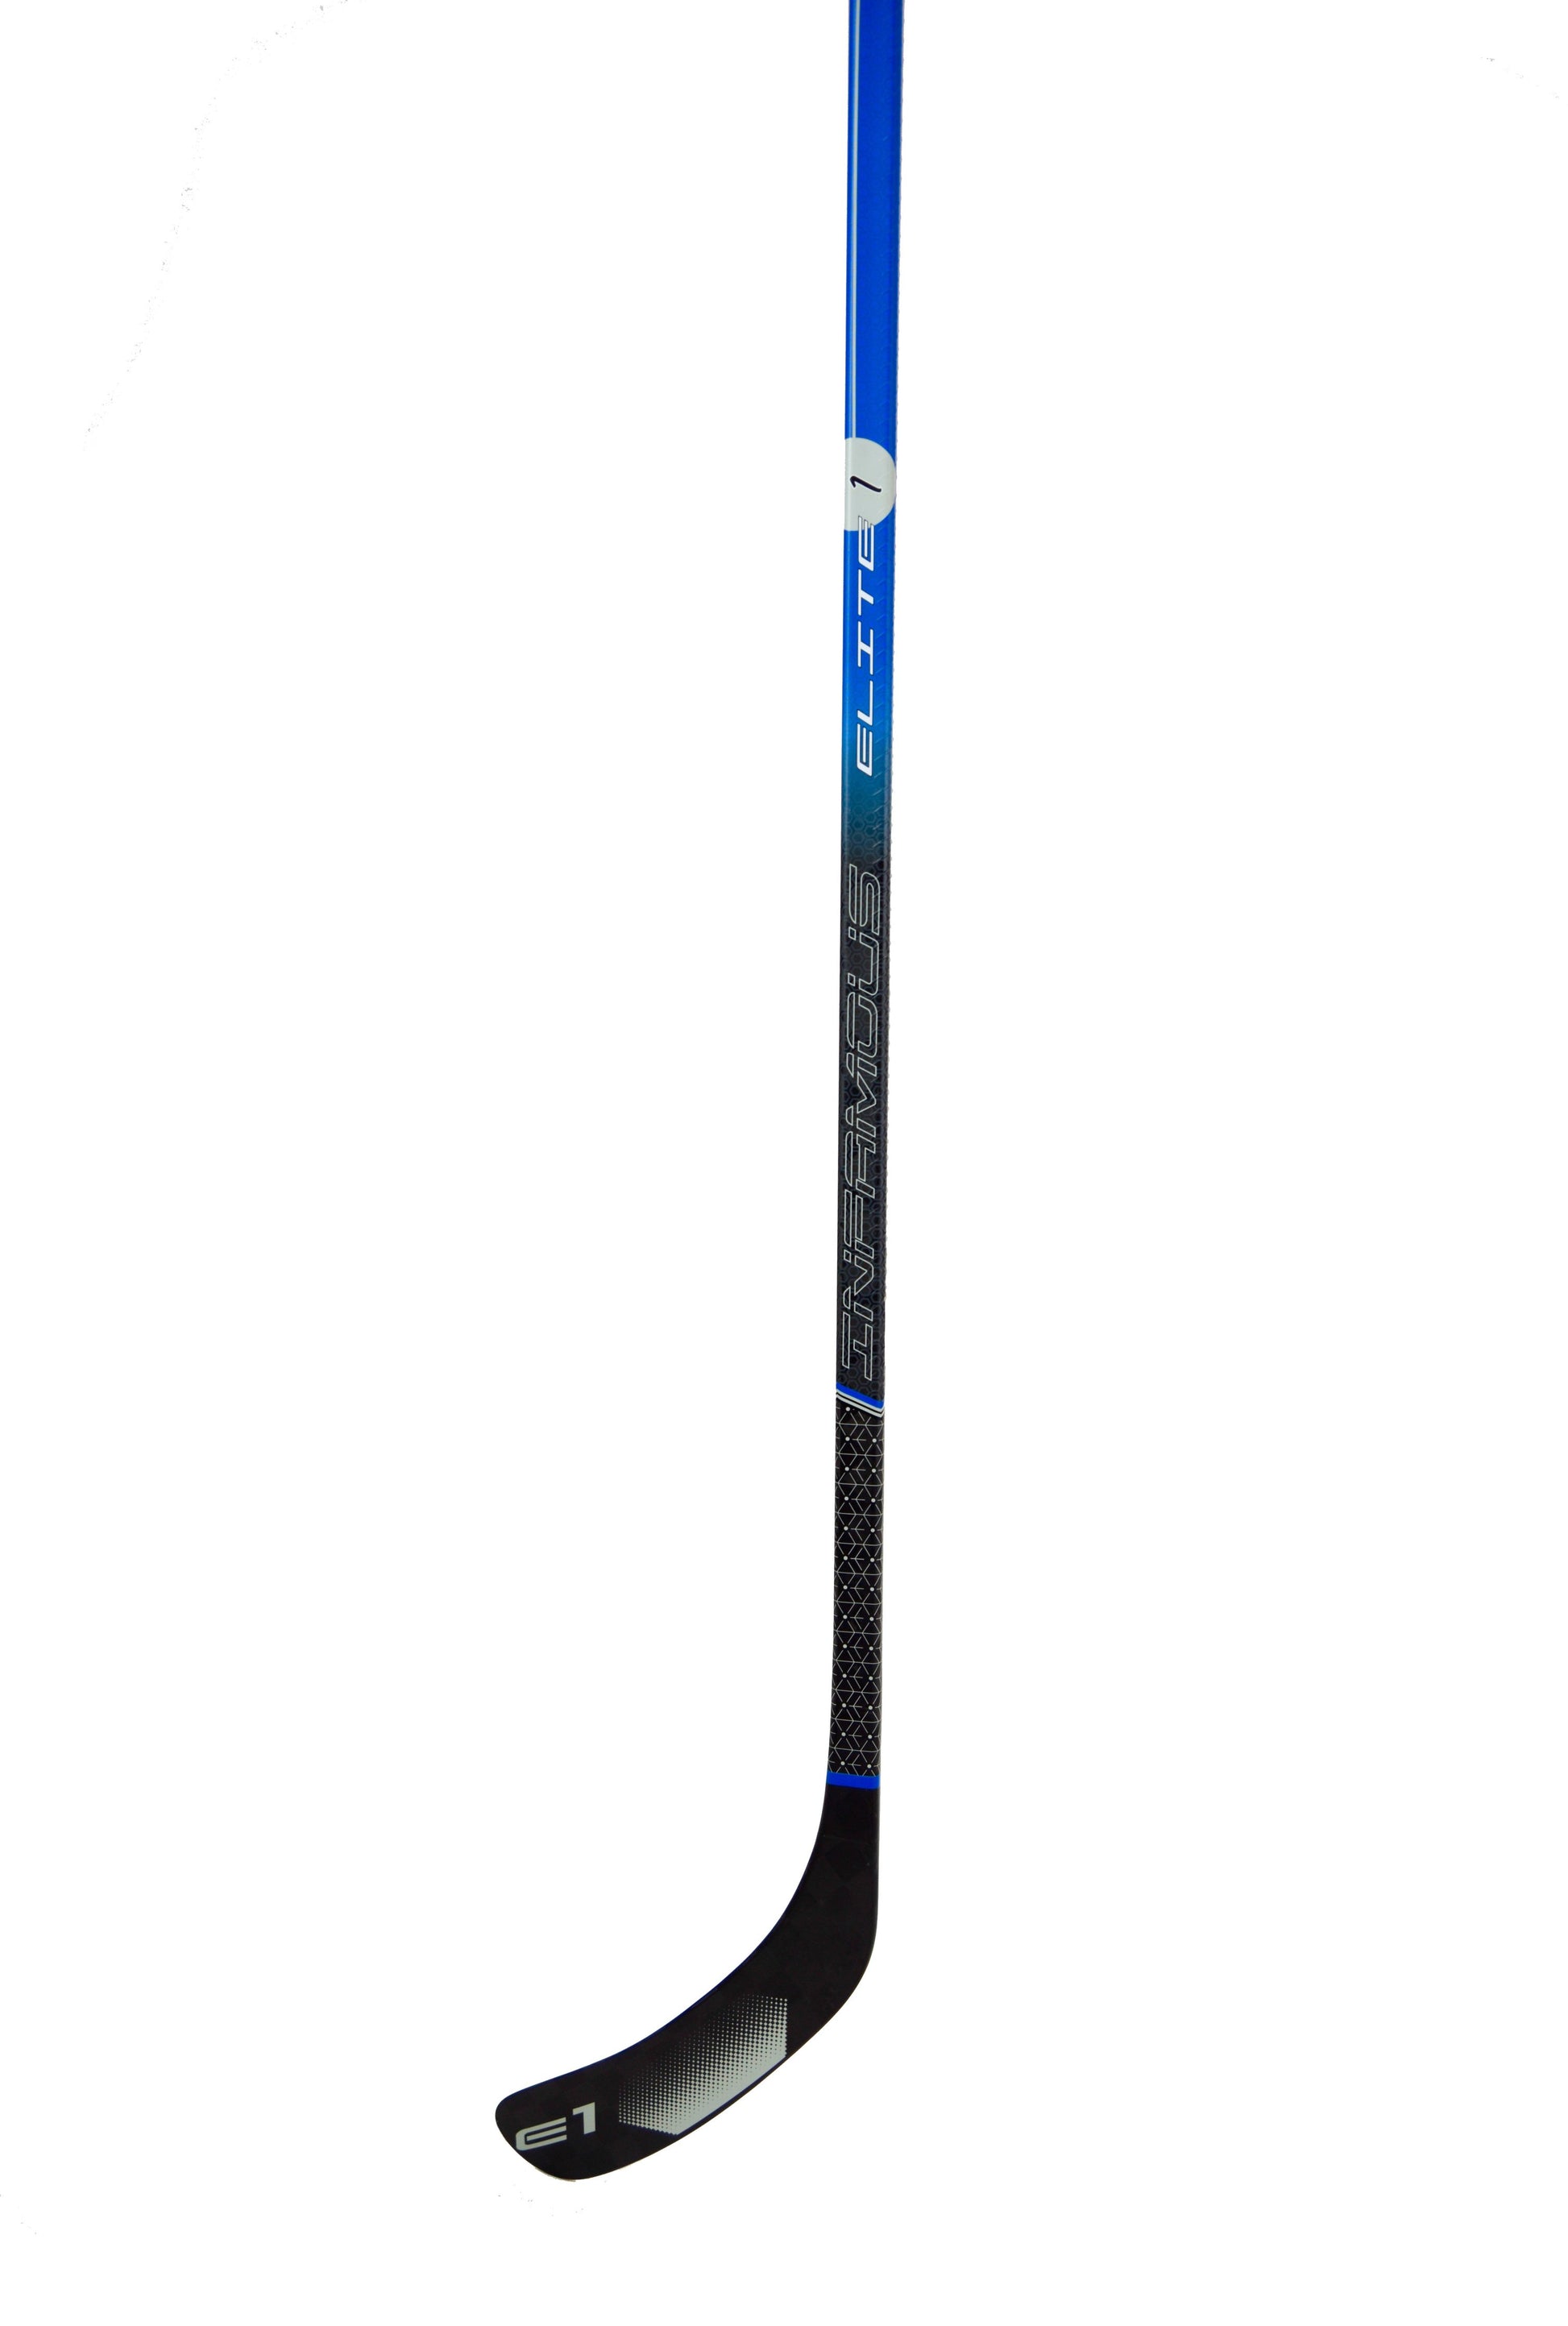 Bauer Nexus Performance Youth Hockey Stick - 30 Flex